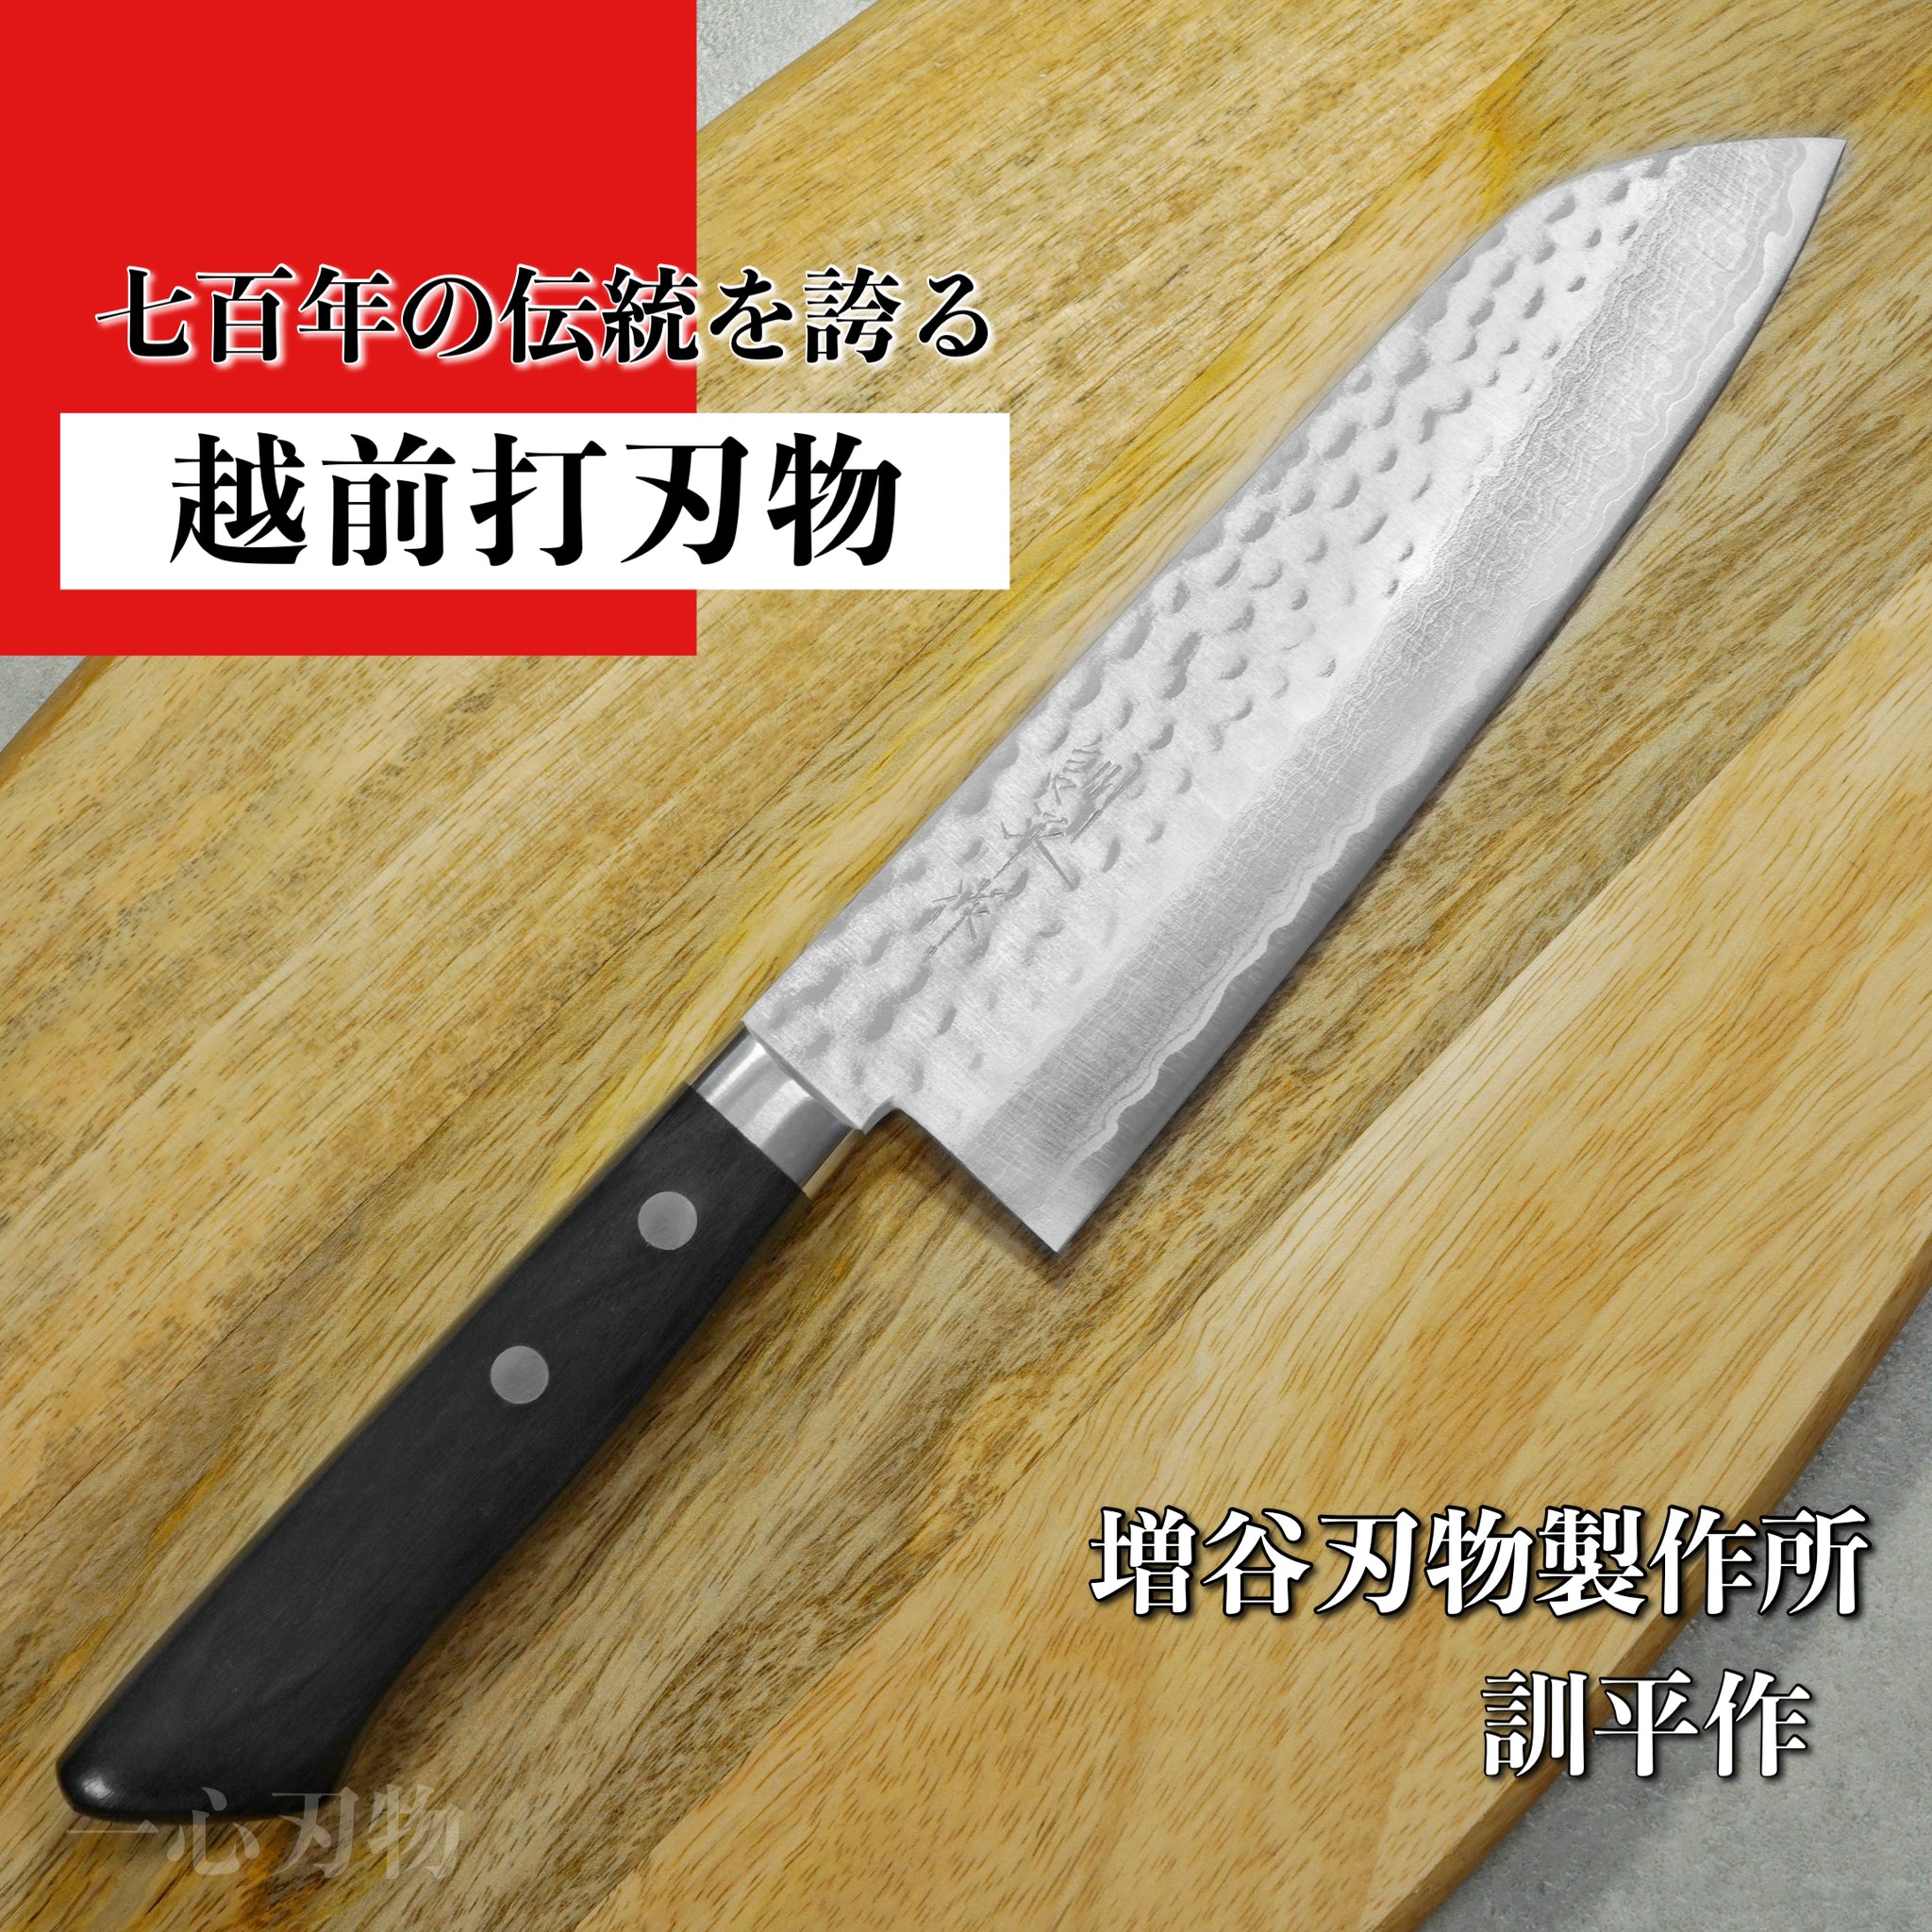 Yoshihiro VG-10 46 Layers Damascus Petty Utility Japanese Chef